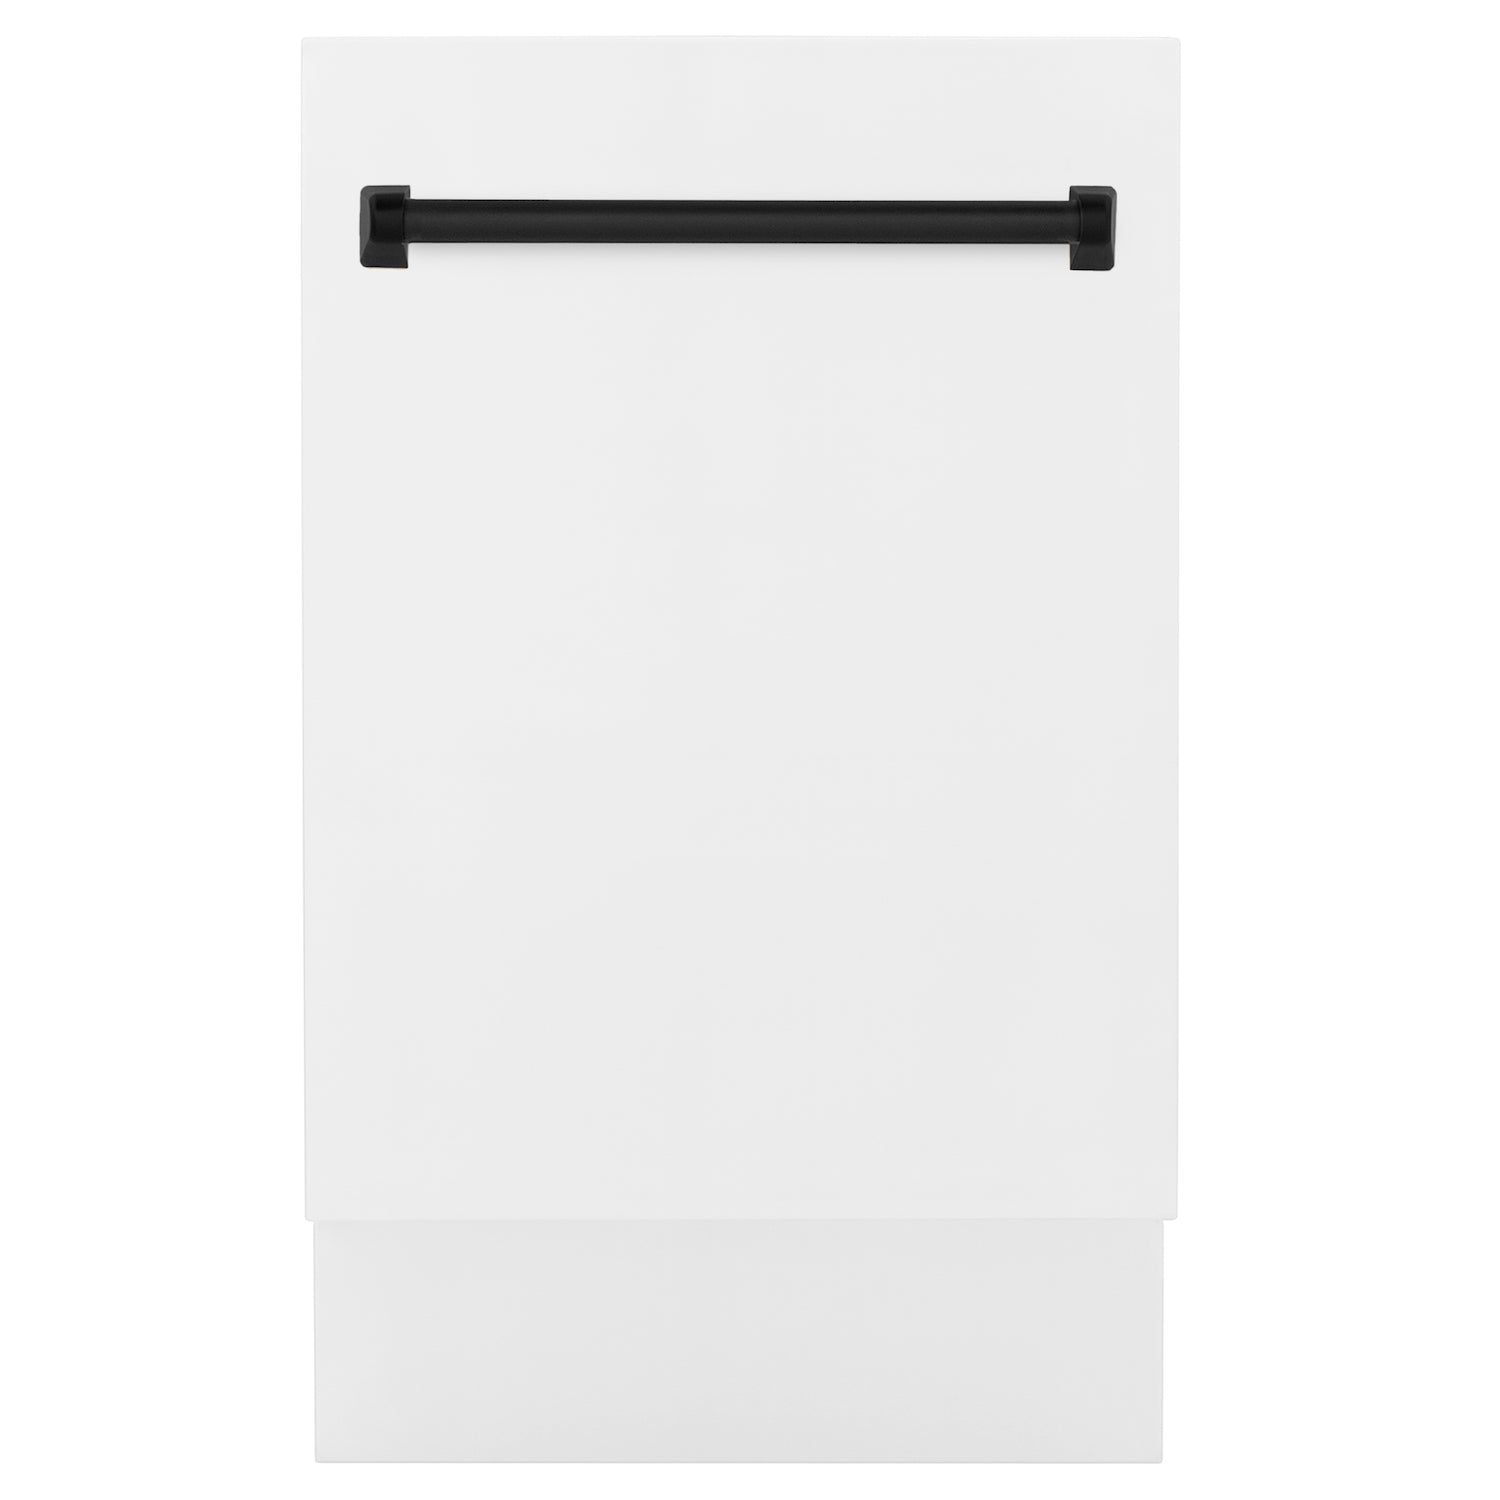 ZLINE Autograph Edition 18” Compact 3rd Rack Top Control Dishwasher in White Matte with Matte Black Accent Handle, 51dBa (DWVZ-WM-18-MB)